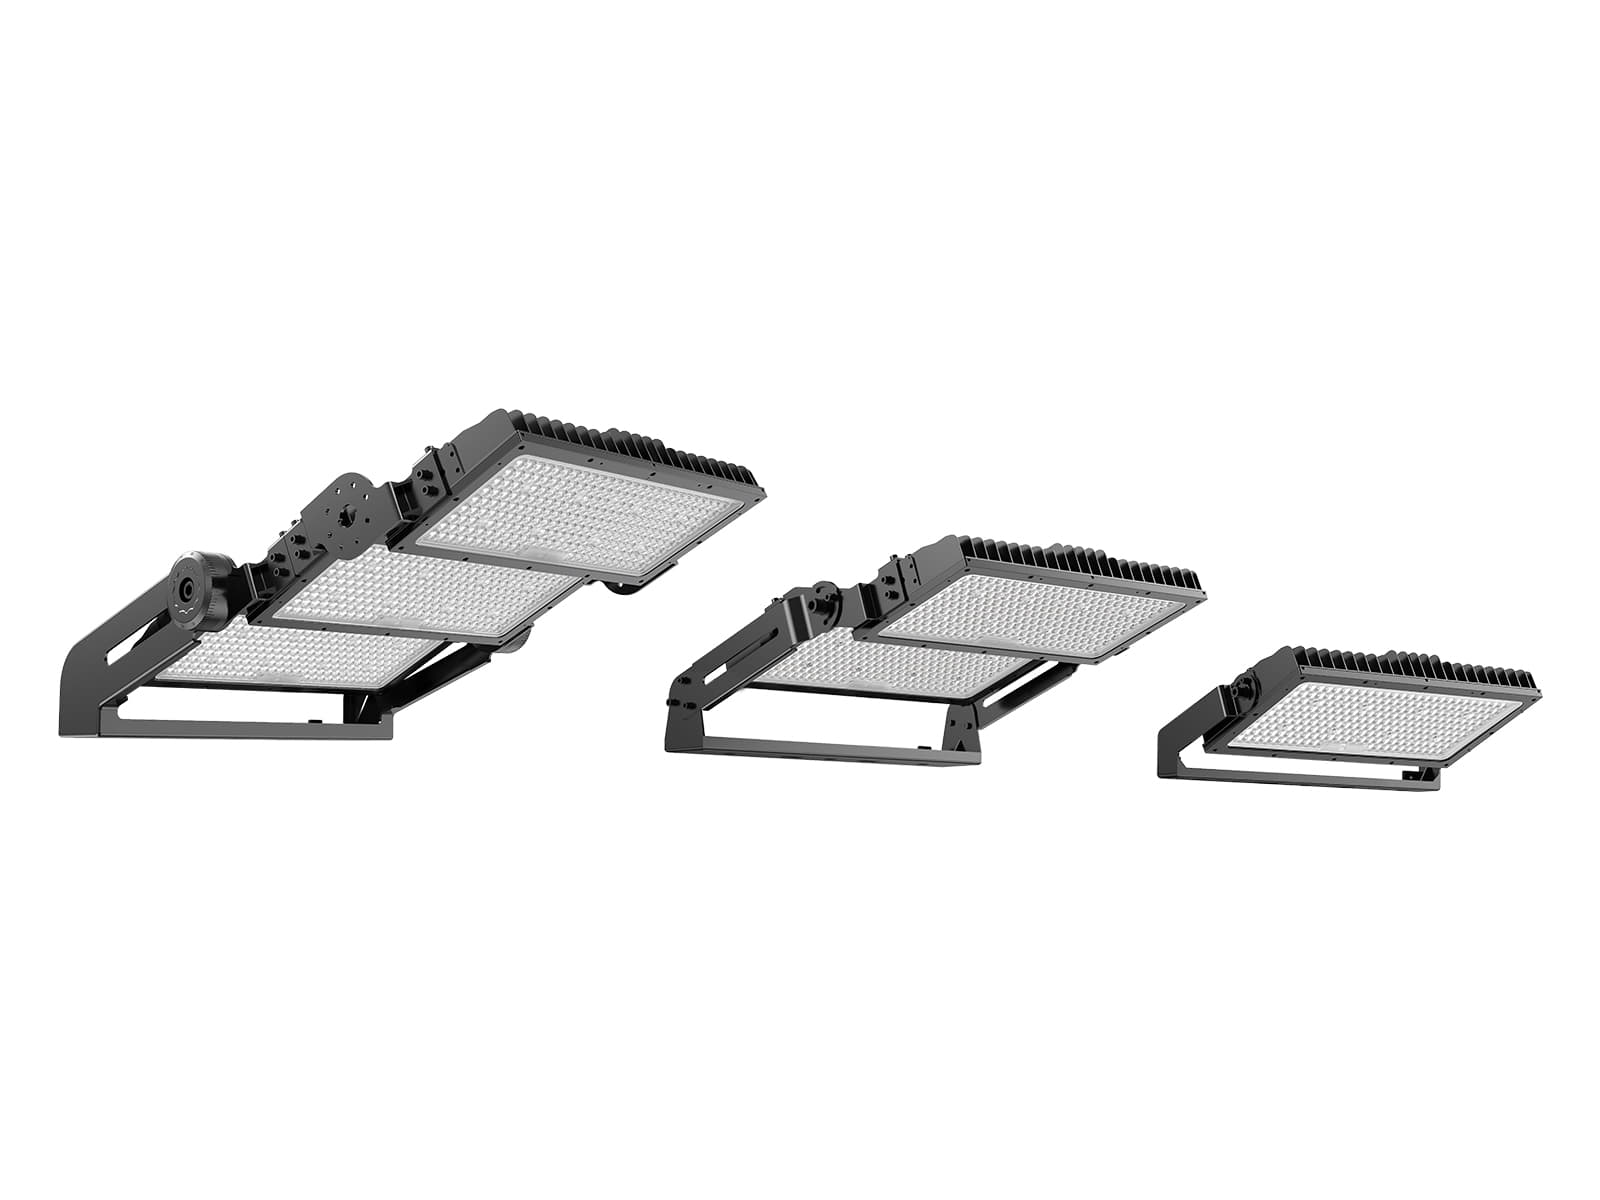 SP02 sports lighting solutions for 800W 1200W 1800W